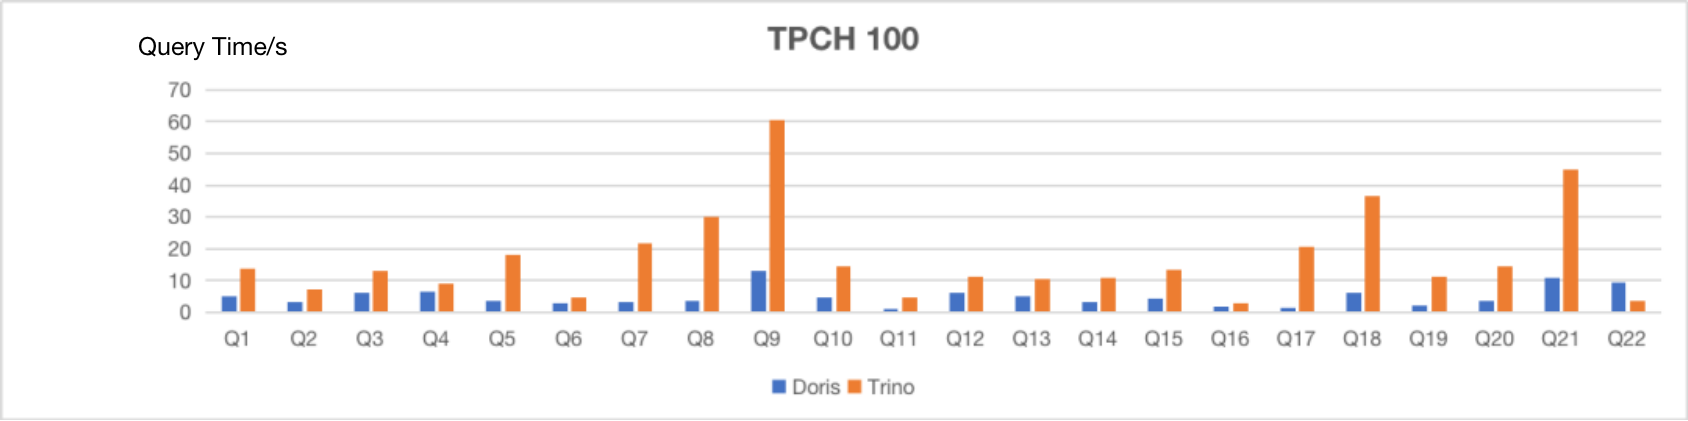 TPCH 100